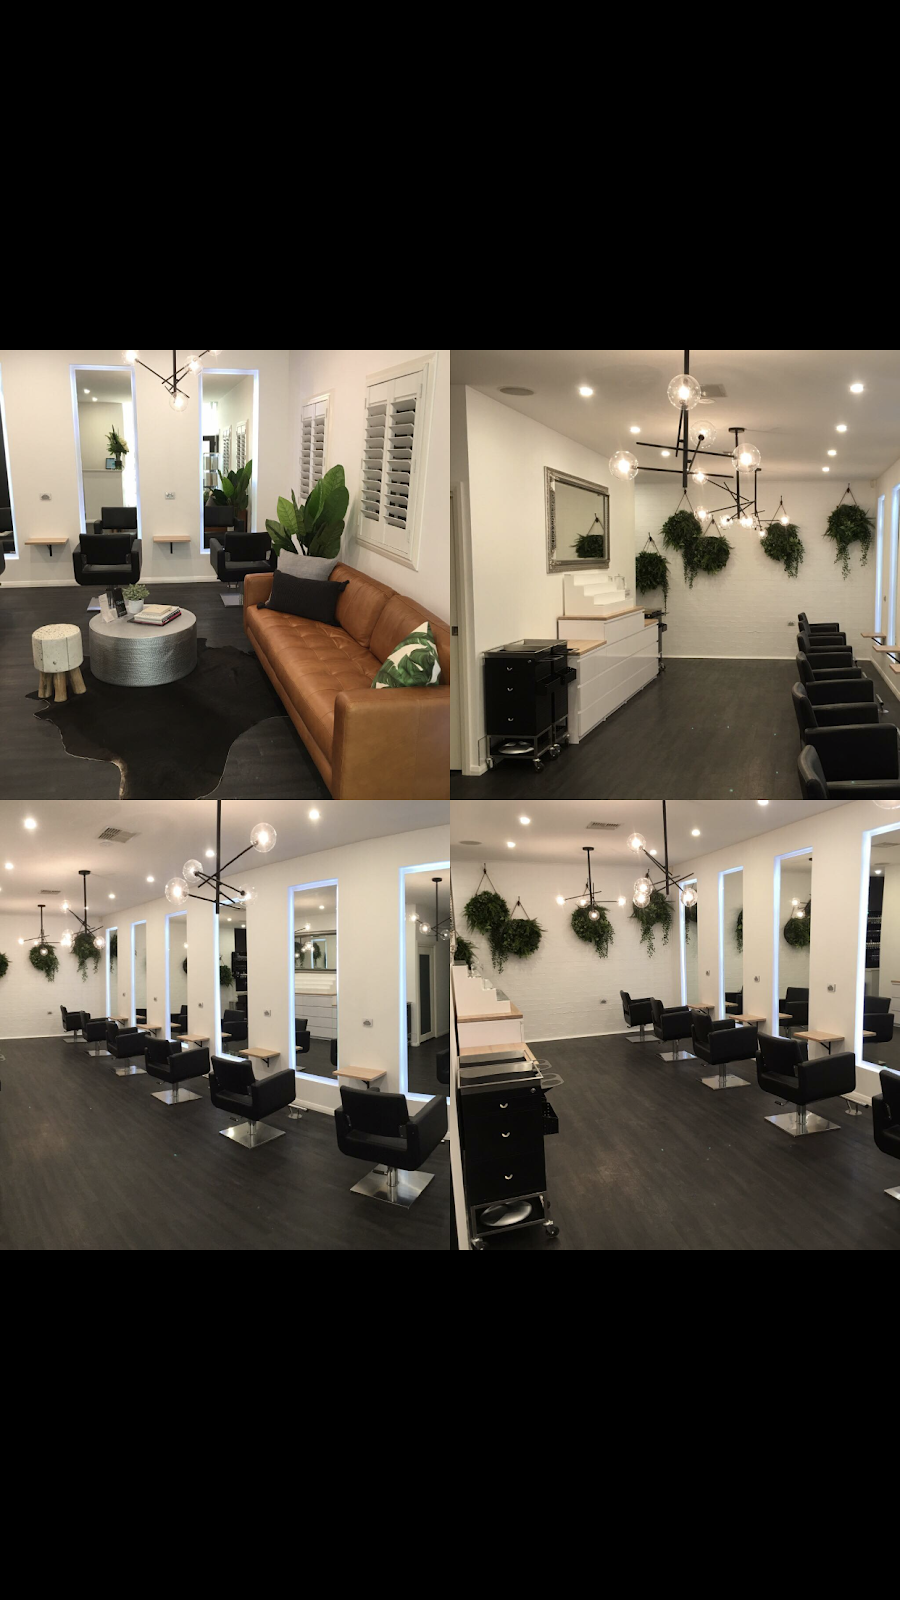 MG Hair Design | hair care | 2/67 Jacaranda Ave, Bradbury NSW 2560, Australia | 0246262990 OR +61 2 4626 2990